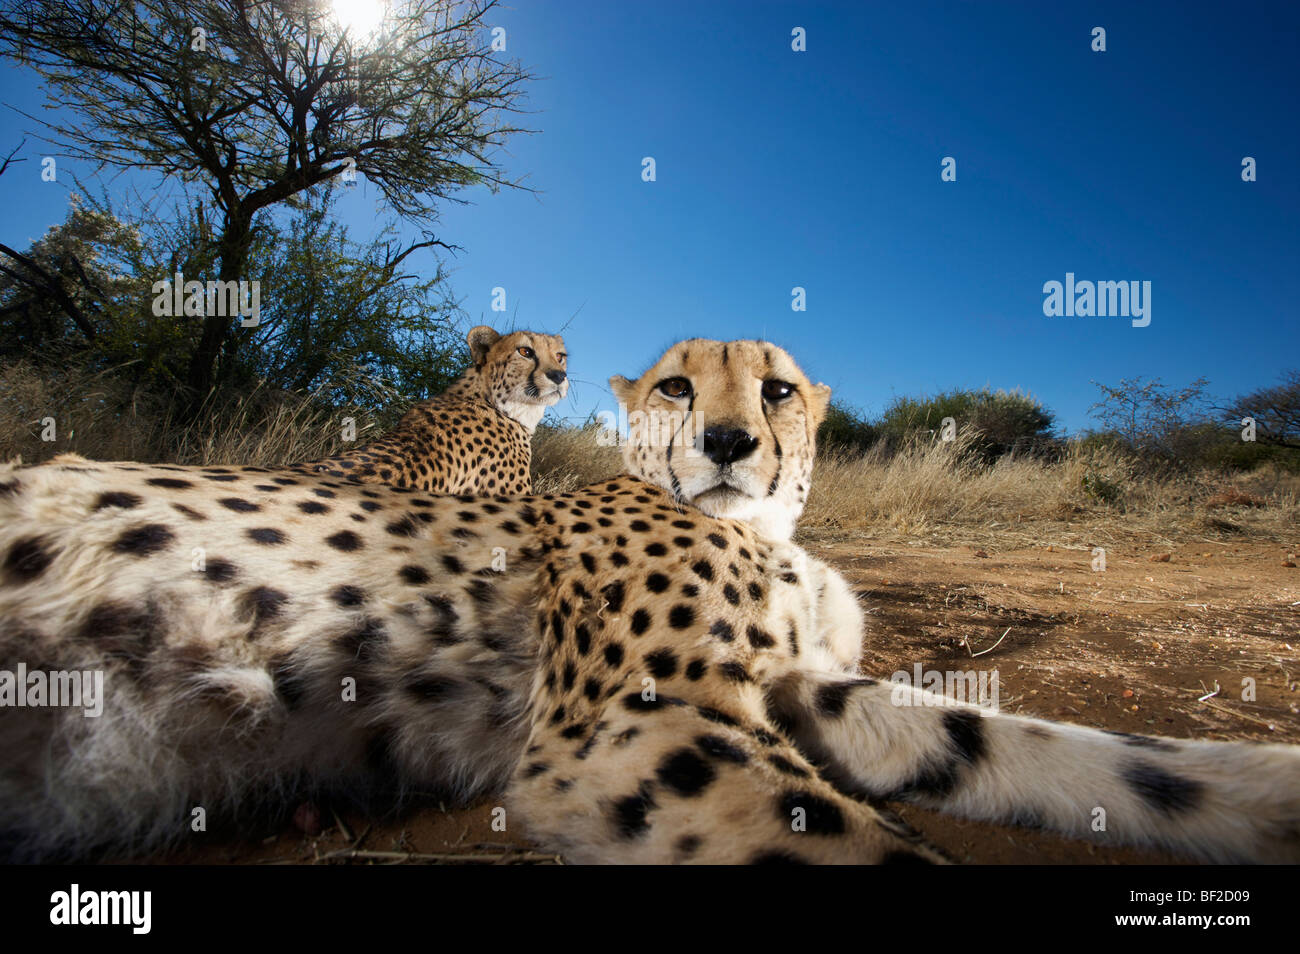 Cerca de guepardo (Acinonyx jubatus) mirando a la cámara, Na'an ku se Santuario de Vida Silvestre, Namibia. Foto de stock